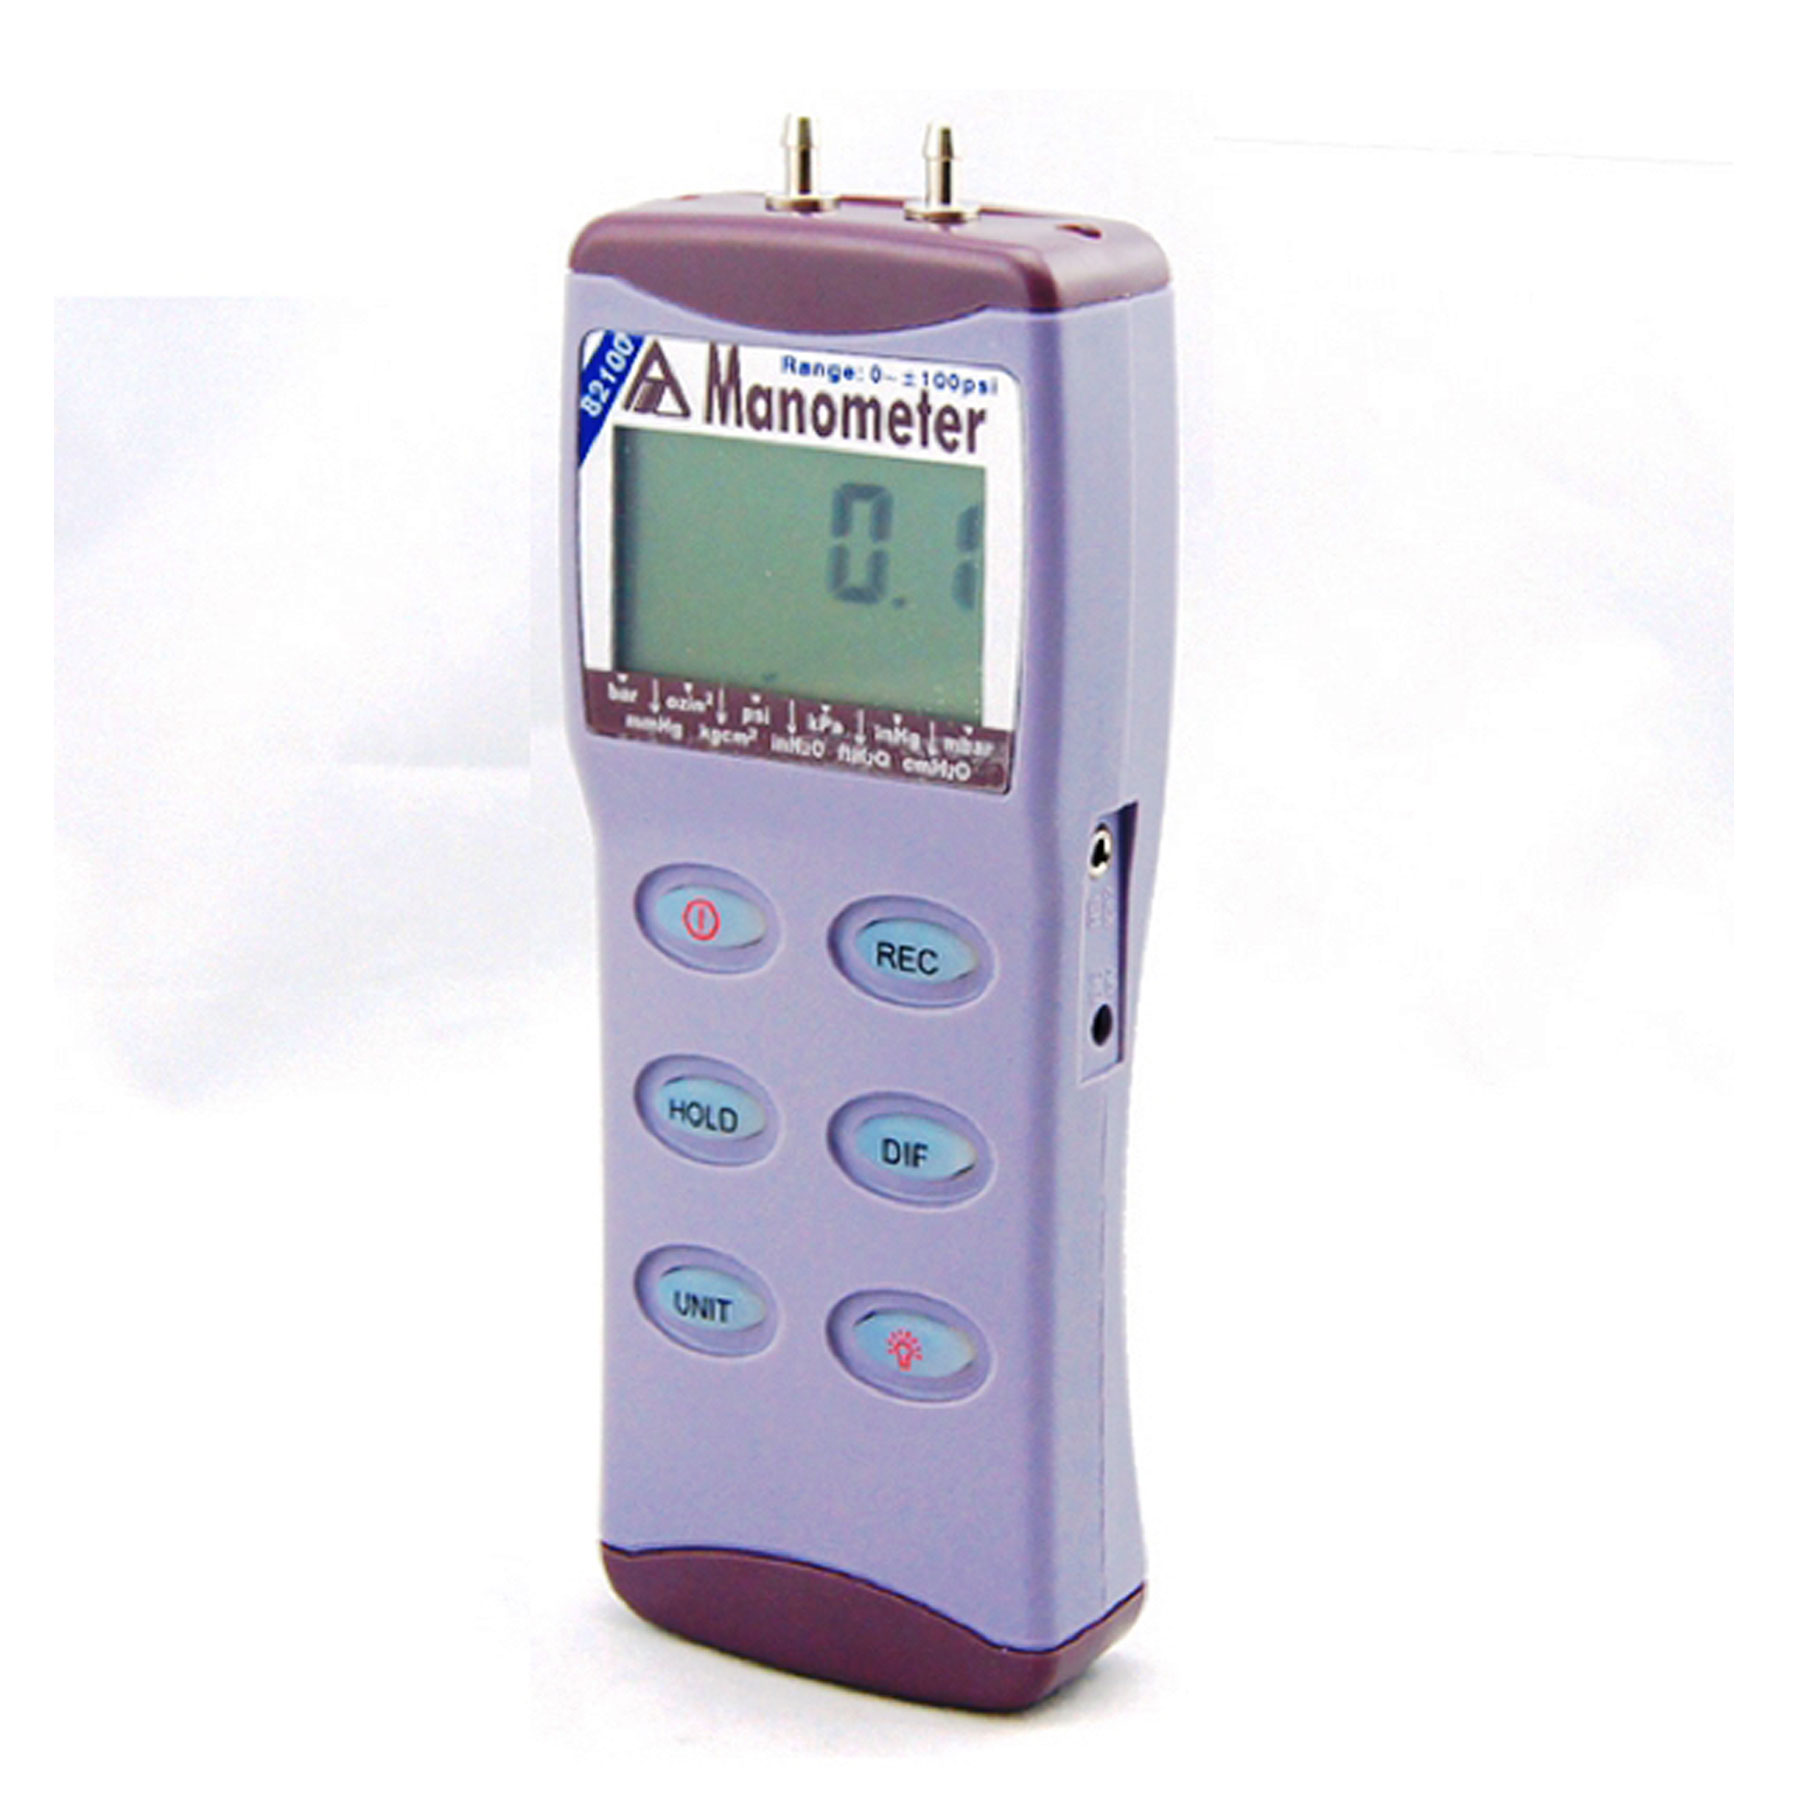 

Portable AZ82100 digital gauge/differential pressure meter Manometer range 0-100Psi Hight Resolution 0.01Psi